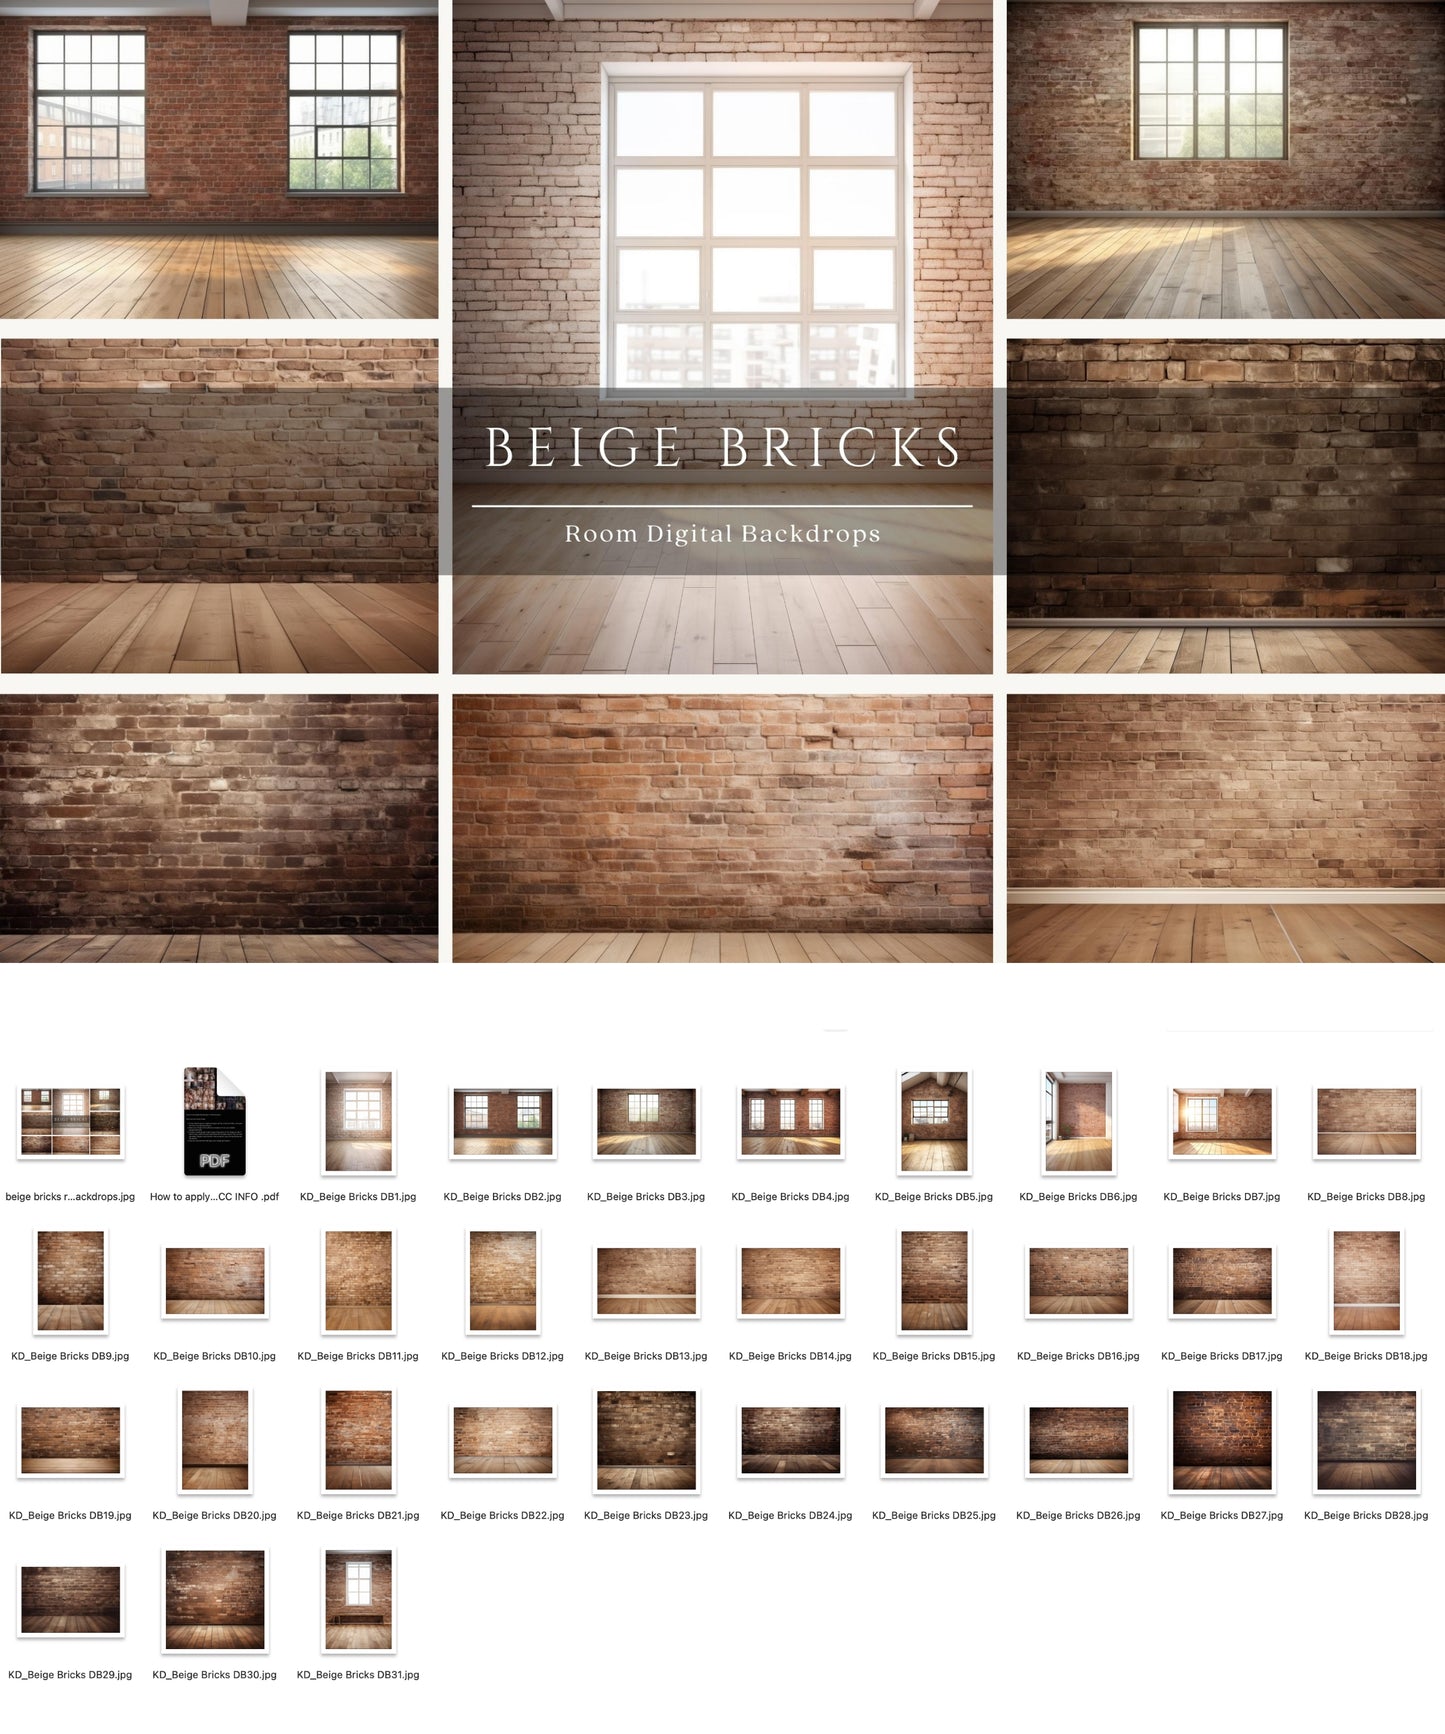 Beige Bricks Room Digital Backdrops